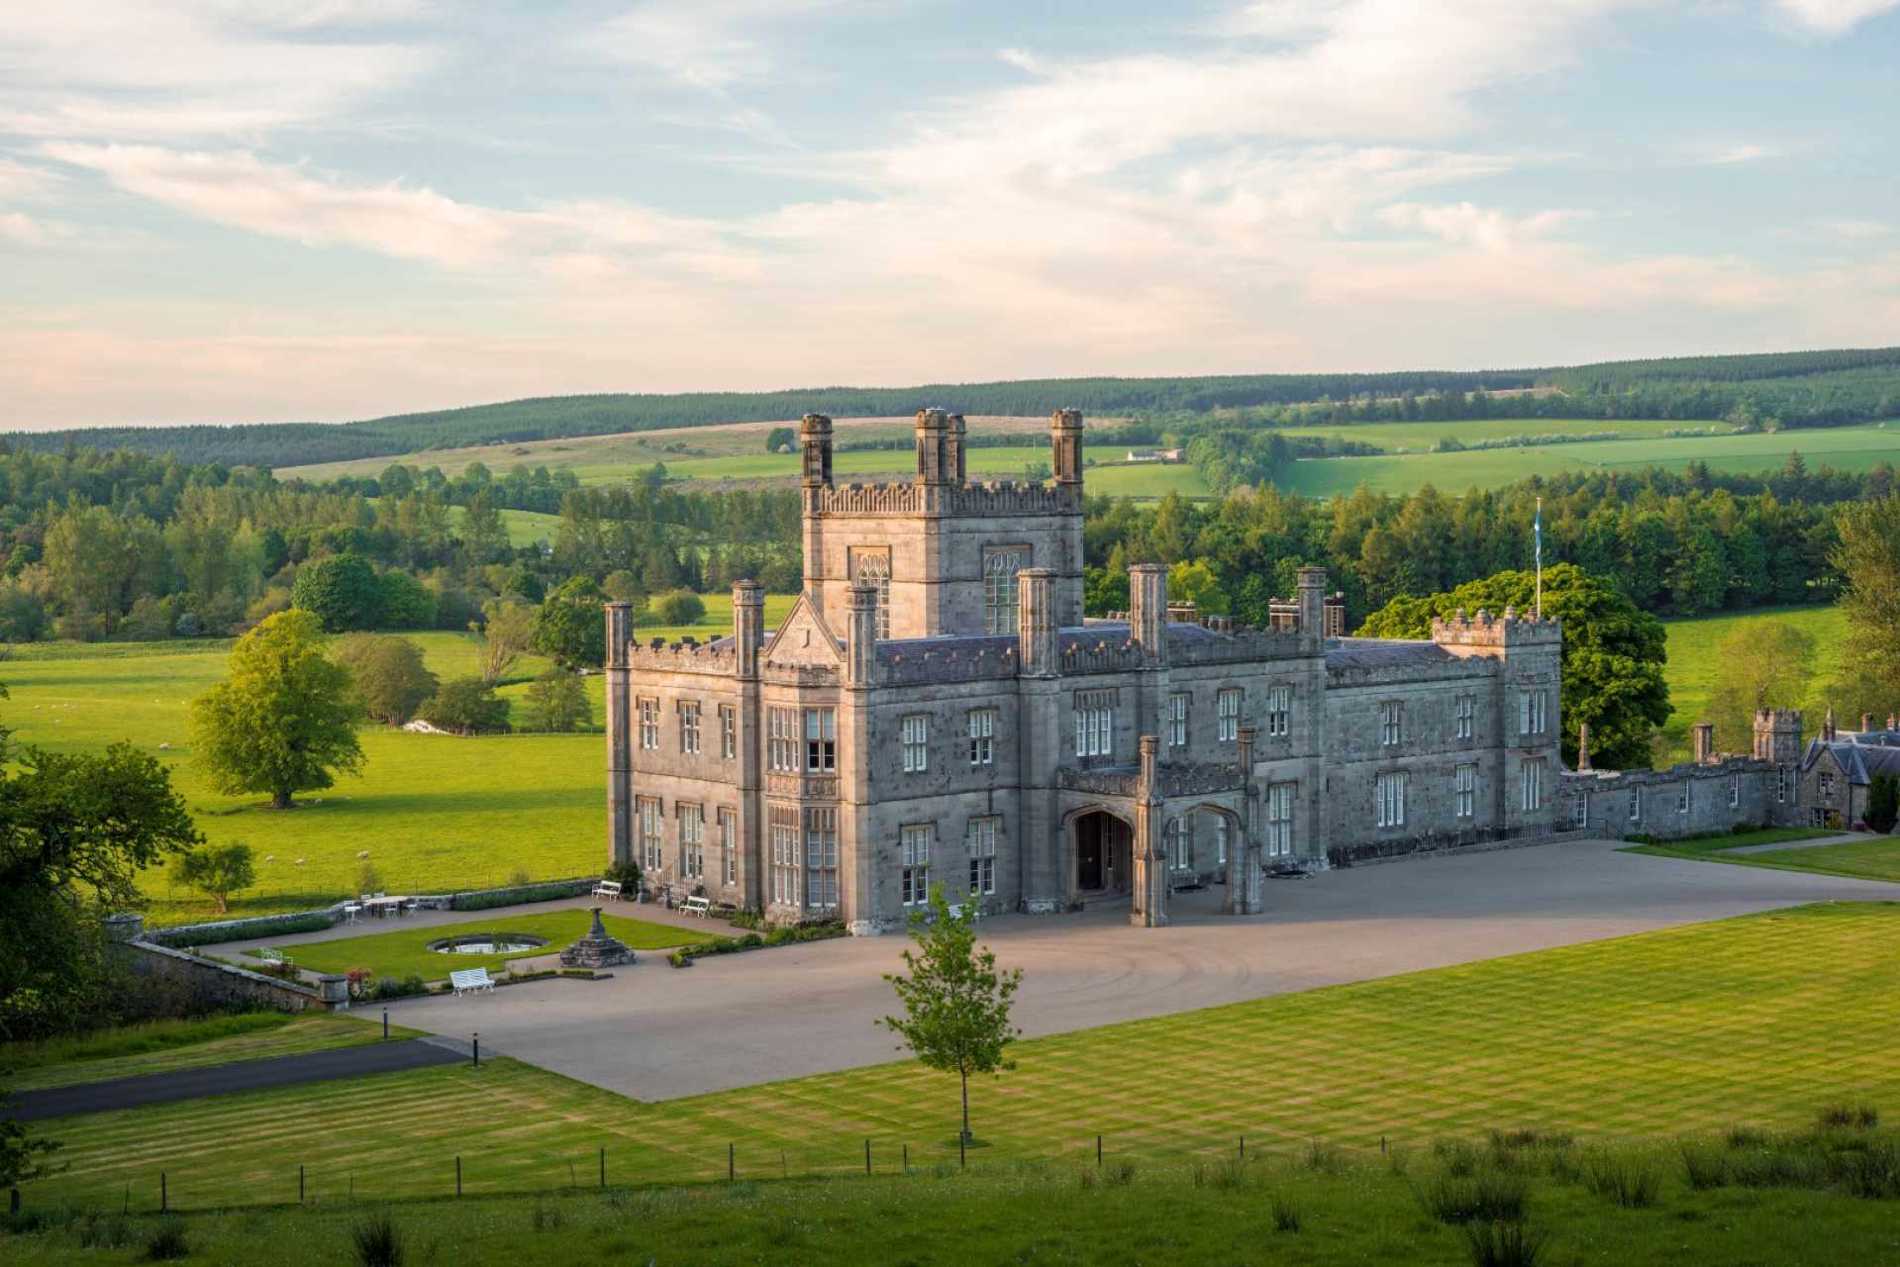 Blairquhain Castle